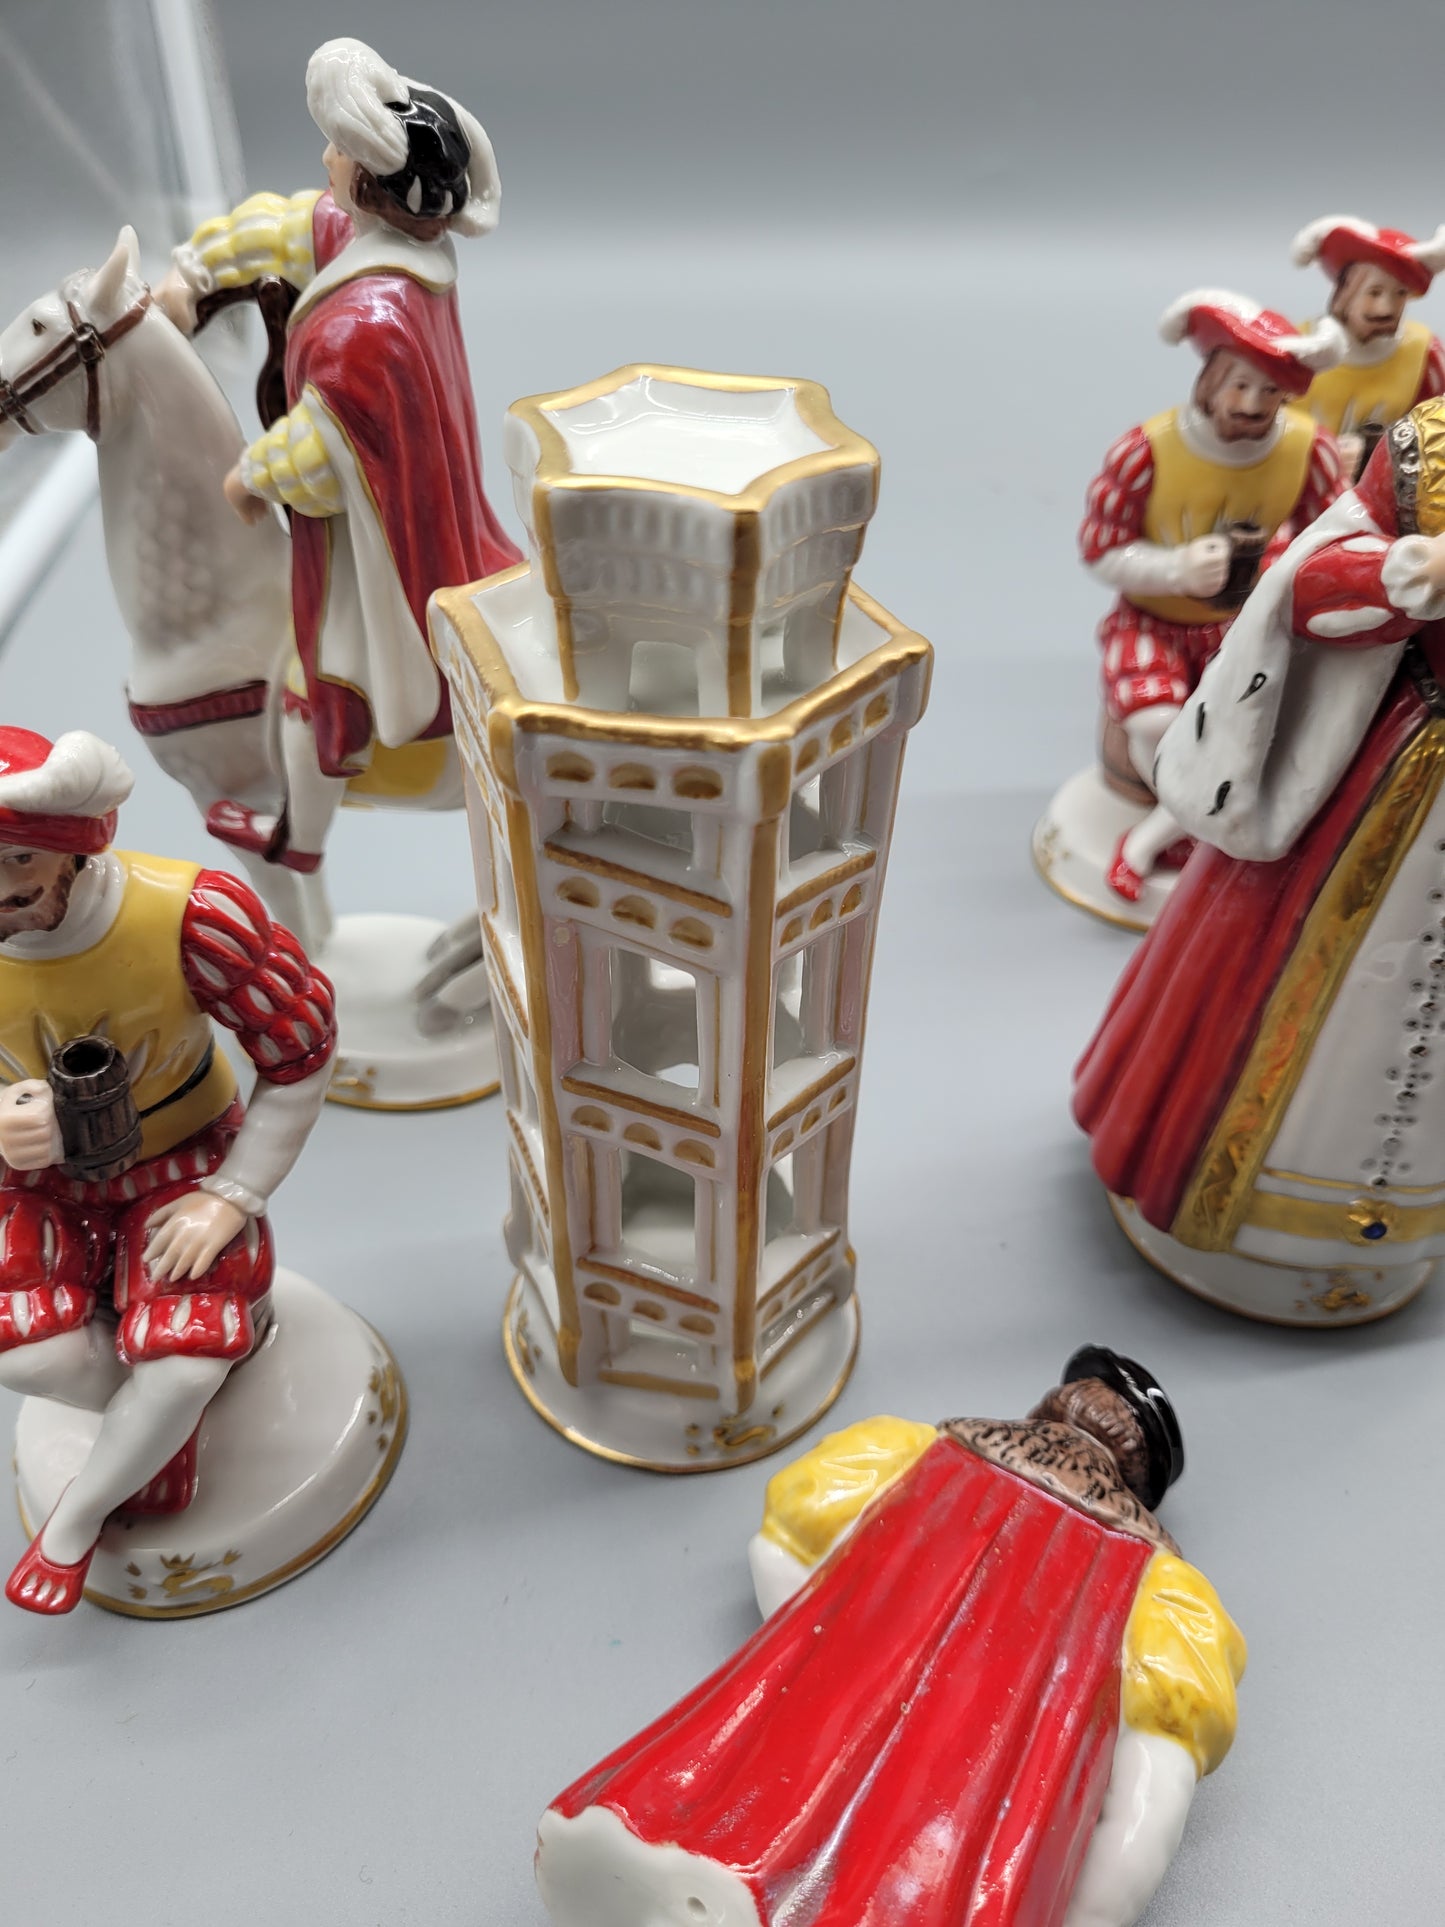 Antike Feine  Porzellan Schachspiel 16 Schachfiguren Dresdner Porzellan